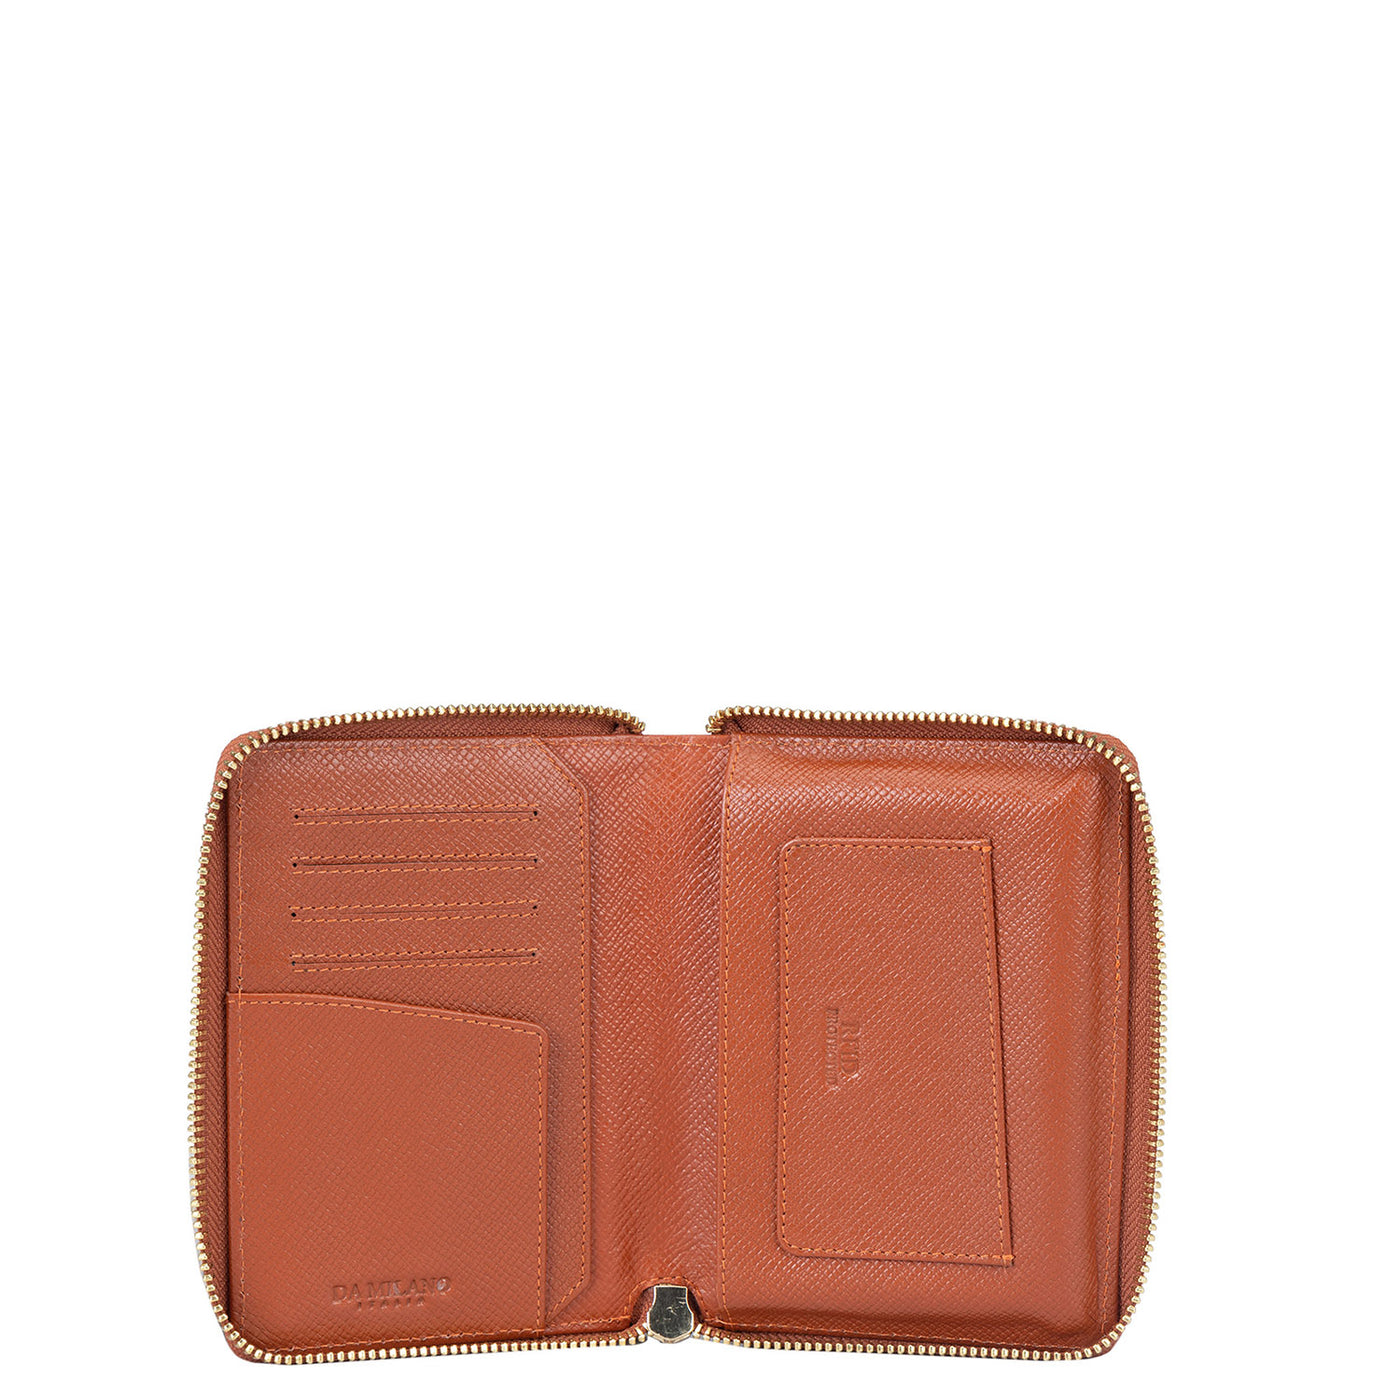 Franzy Leather Passport Case - Rust Orange